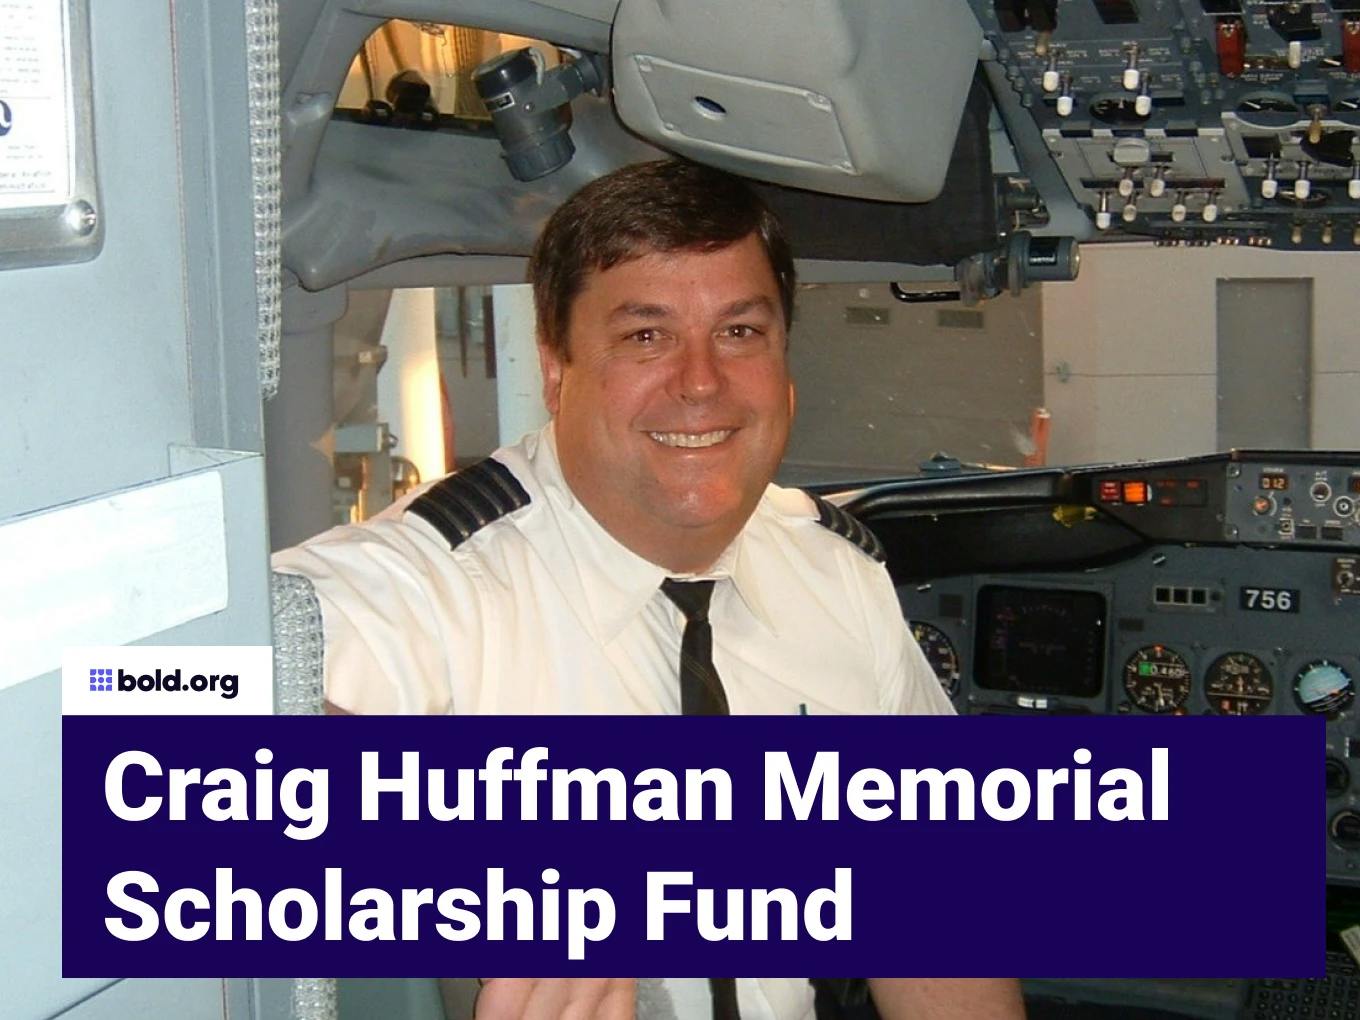 Craig Huffman Memorial Scholarship Fund